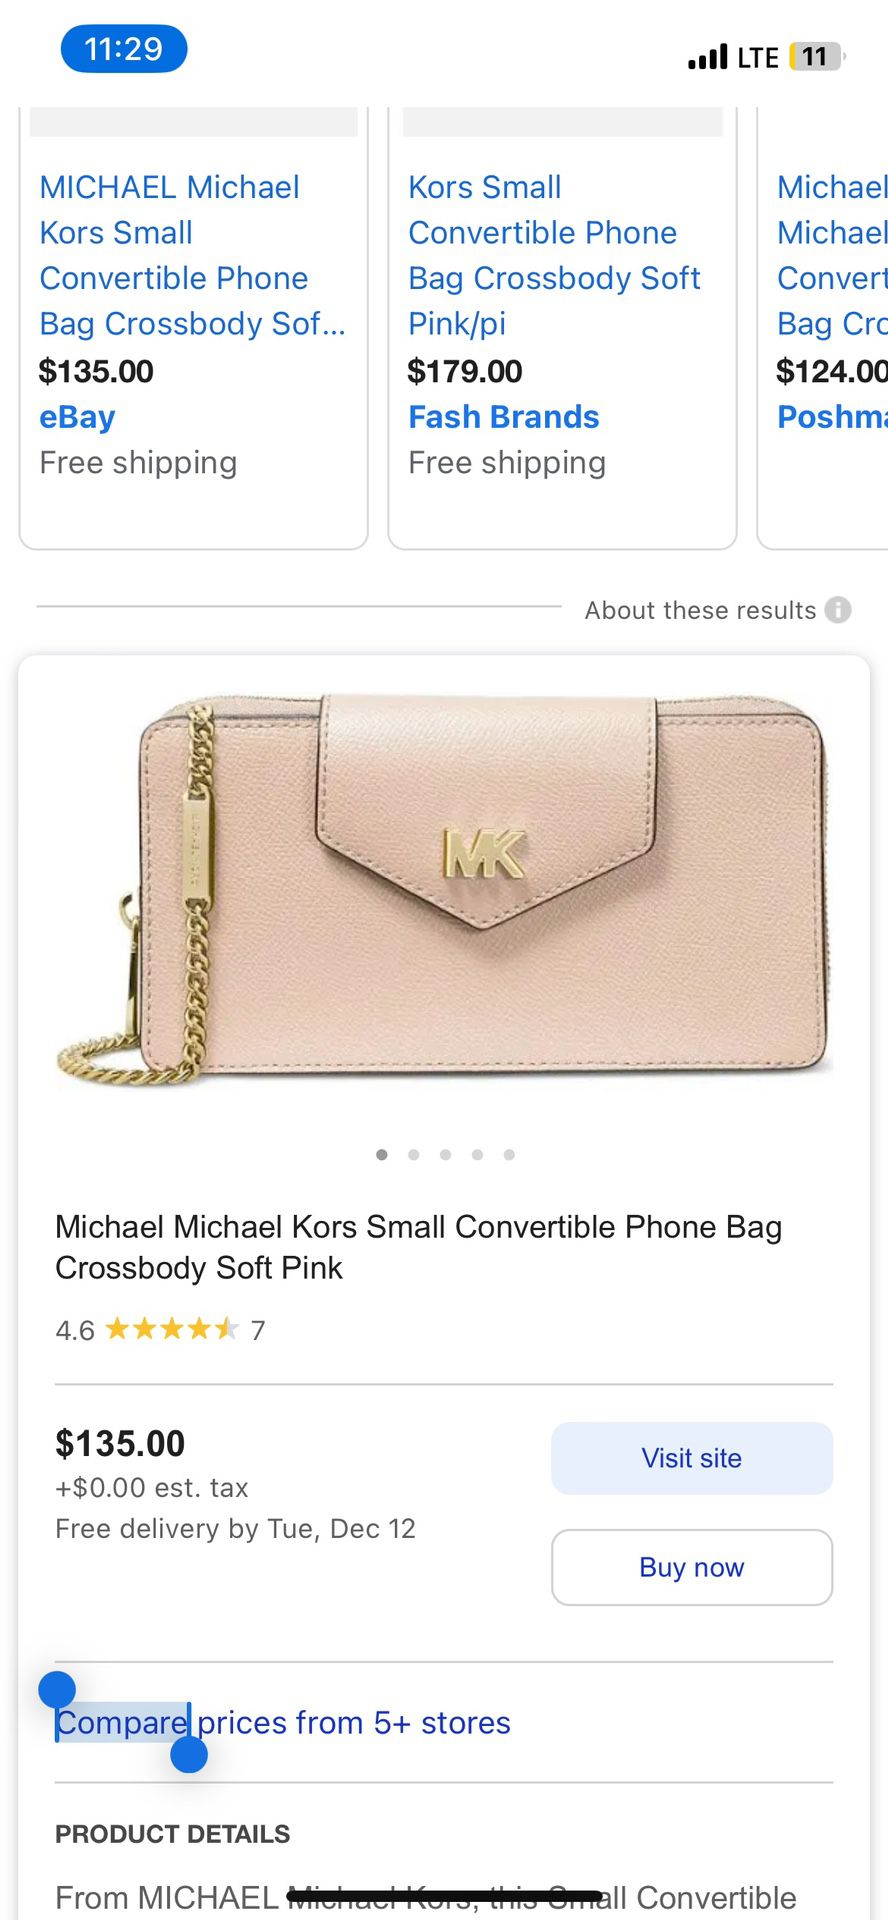 MICHAEL Michael Kors Small Convertible Phone Bag Crossbody